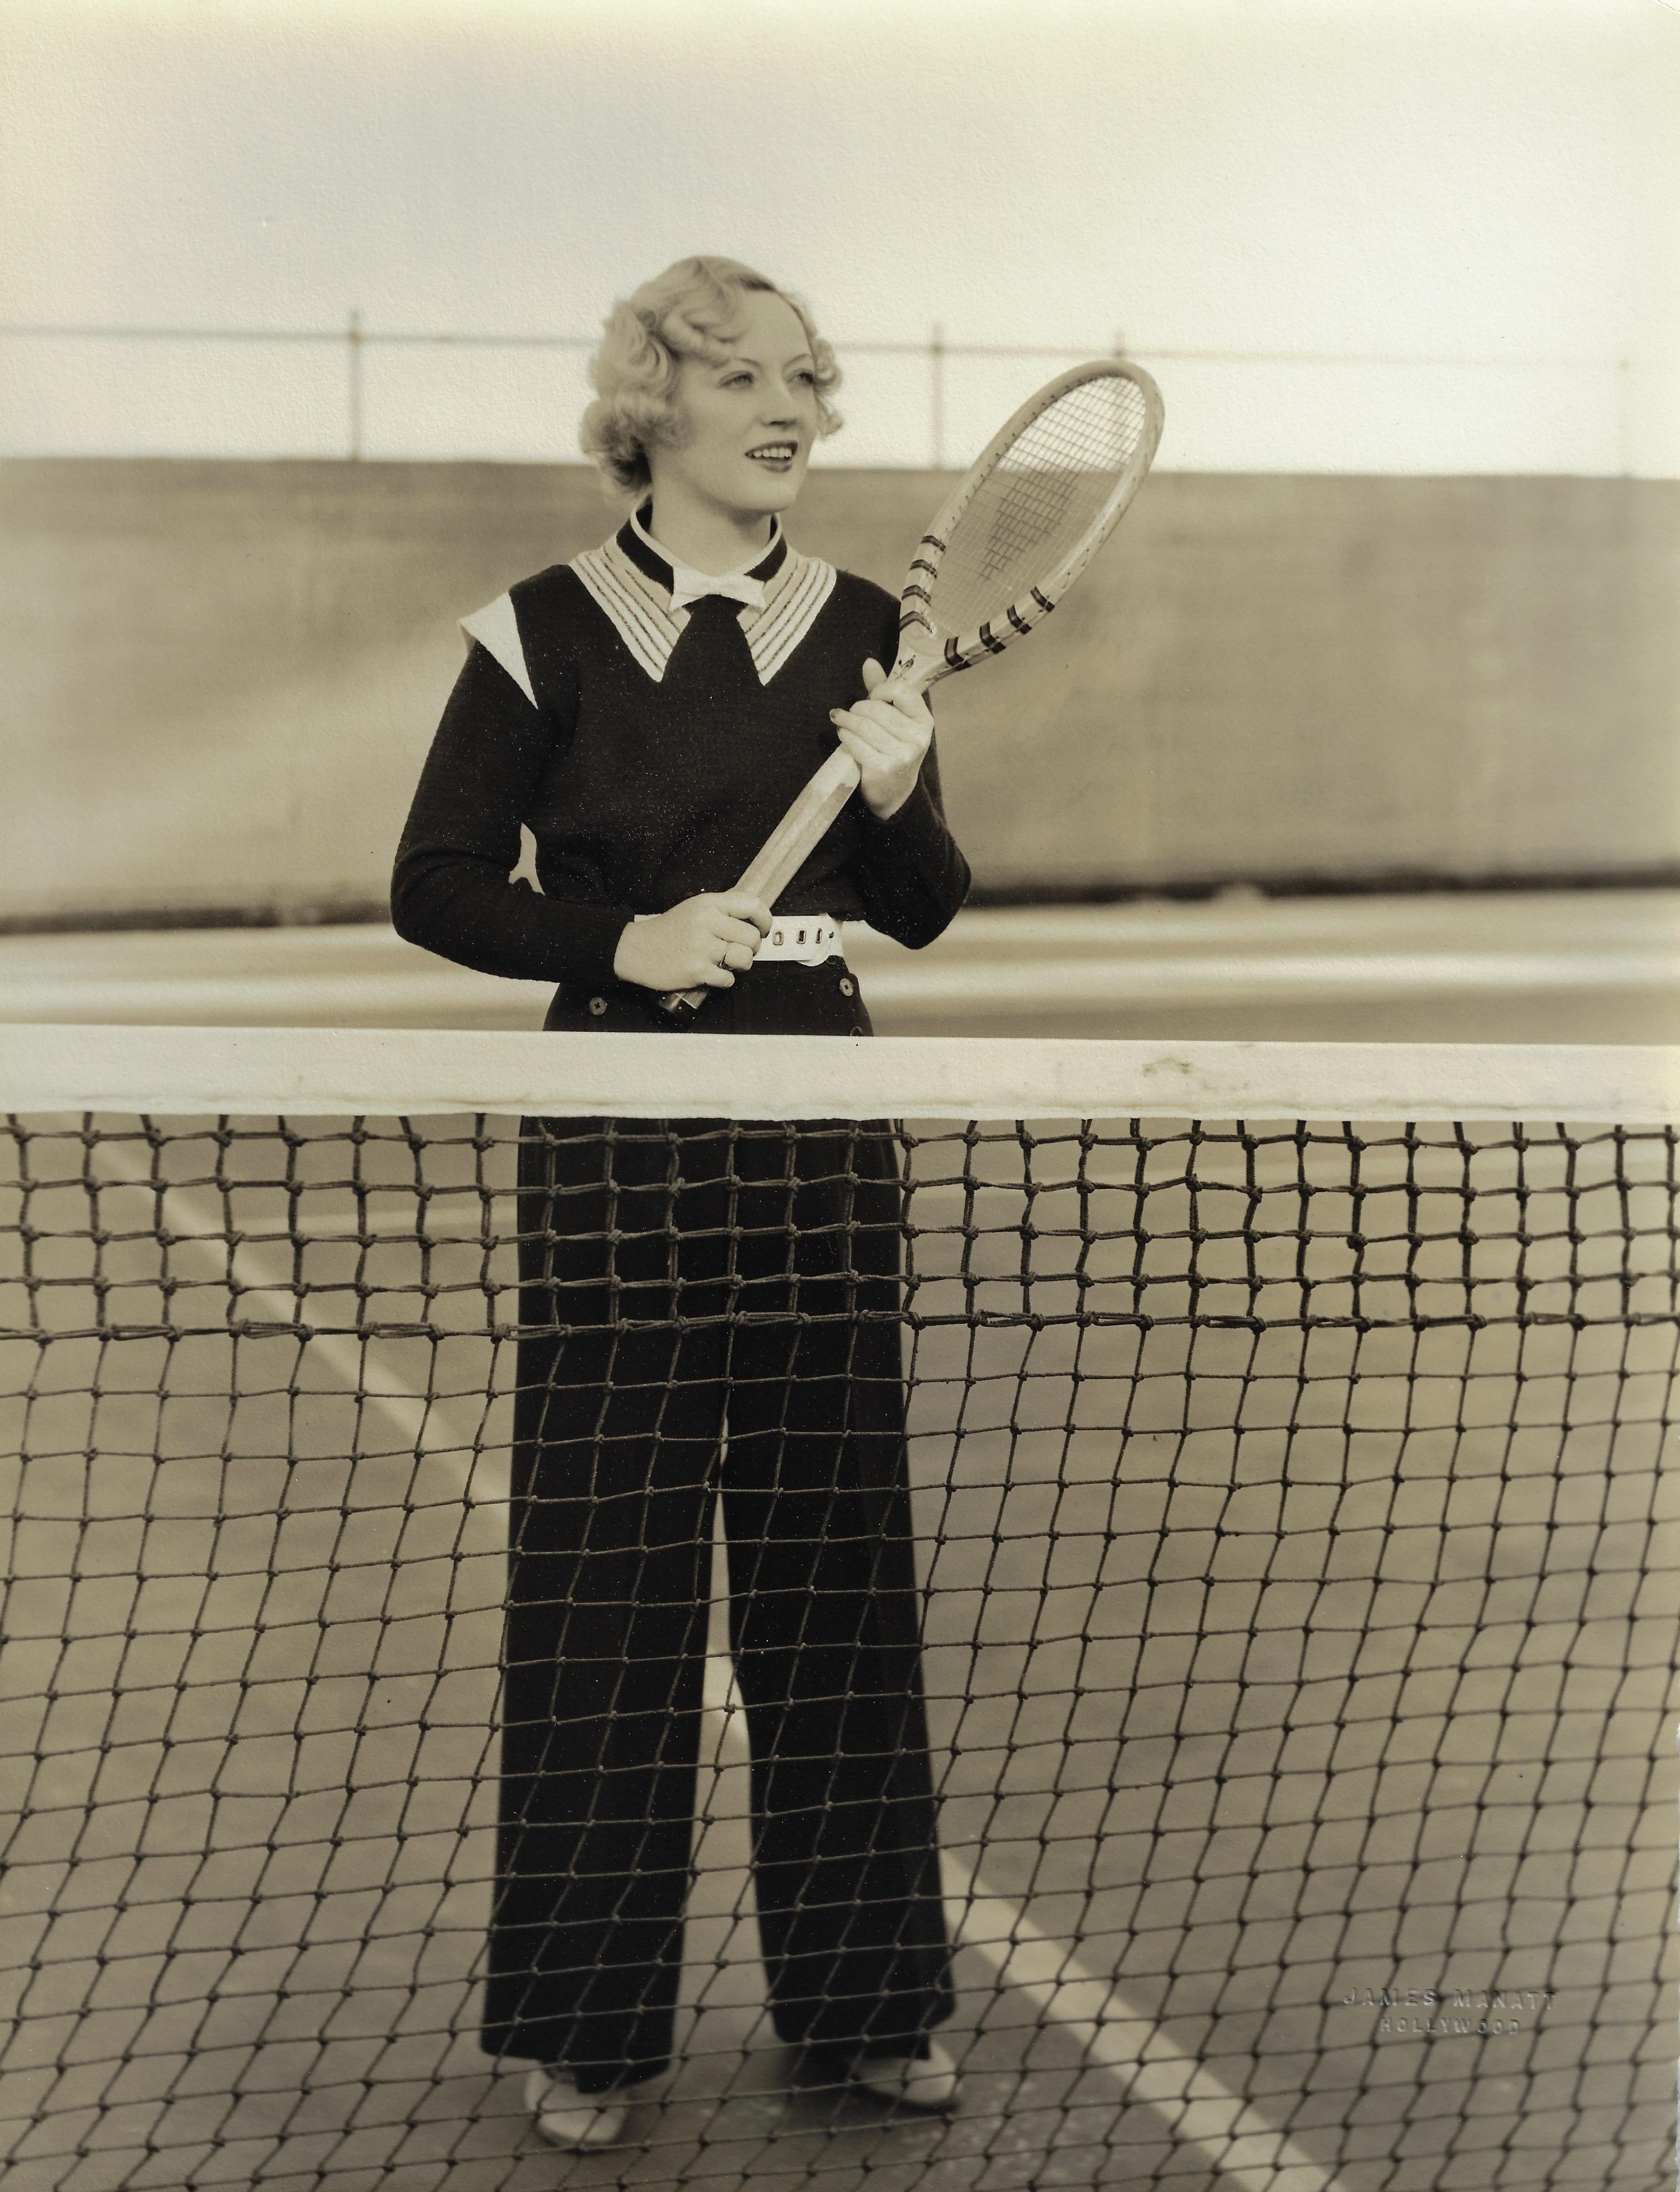 James Manatt Black and White Photograph - Marion Davies playing tennis